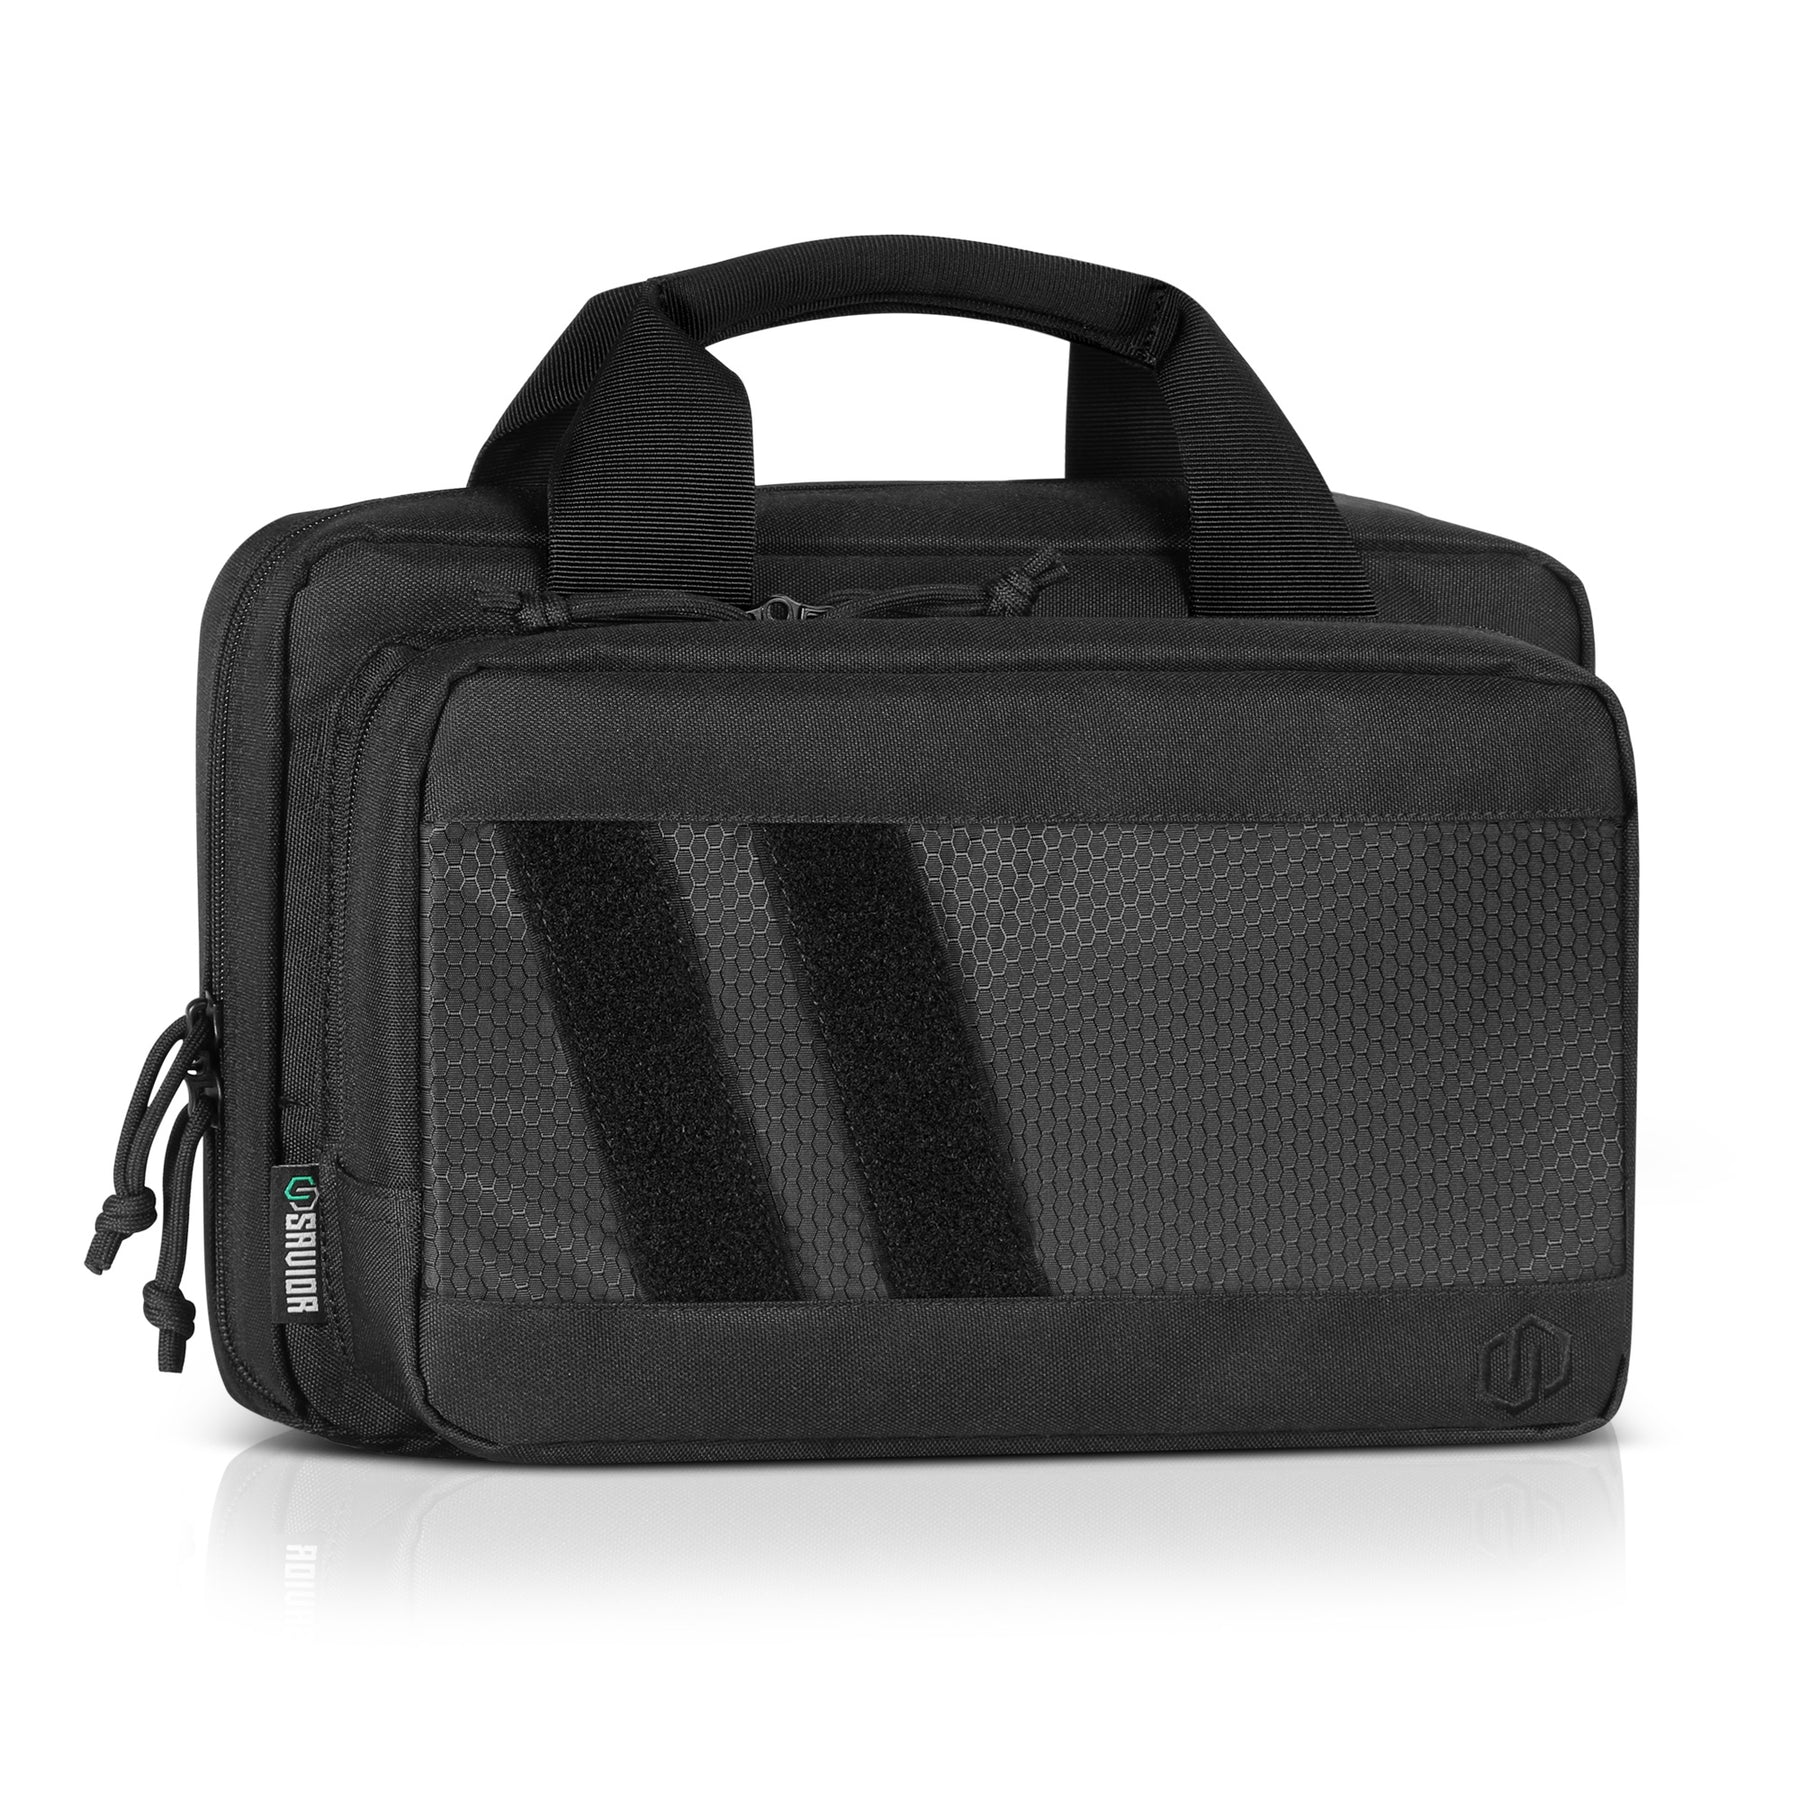 https://cityarsenal.com/product/savior-equipment-specialist-series-low-profile-soft-double-handgun-bag-carrying-case/